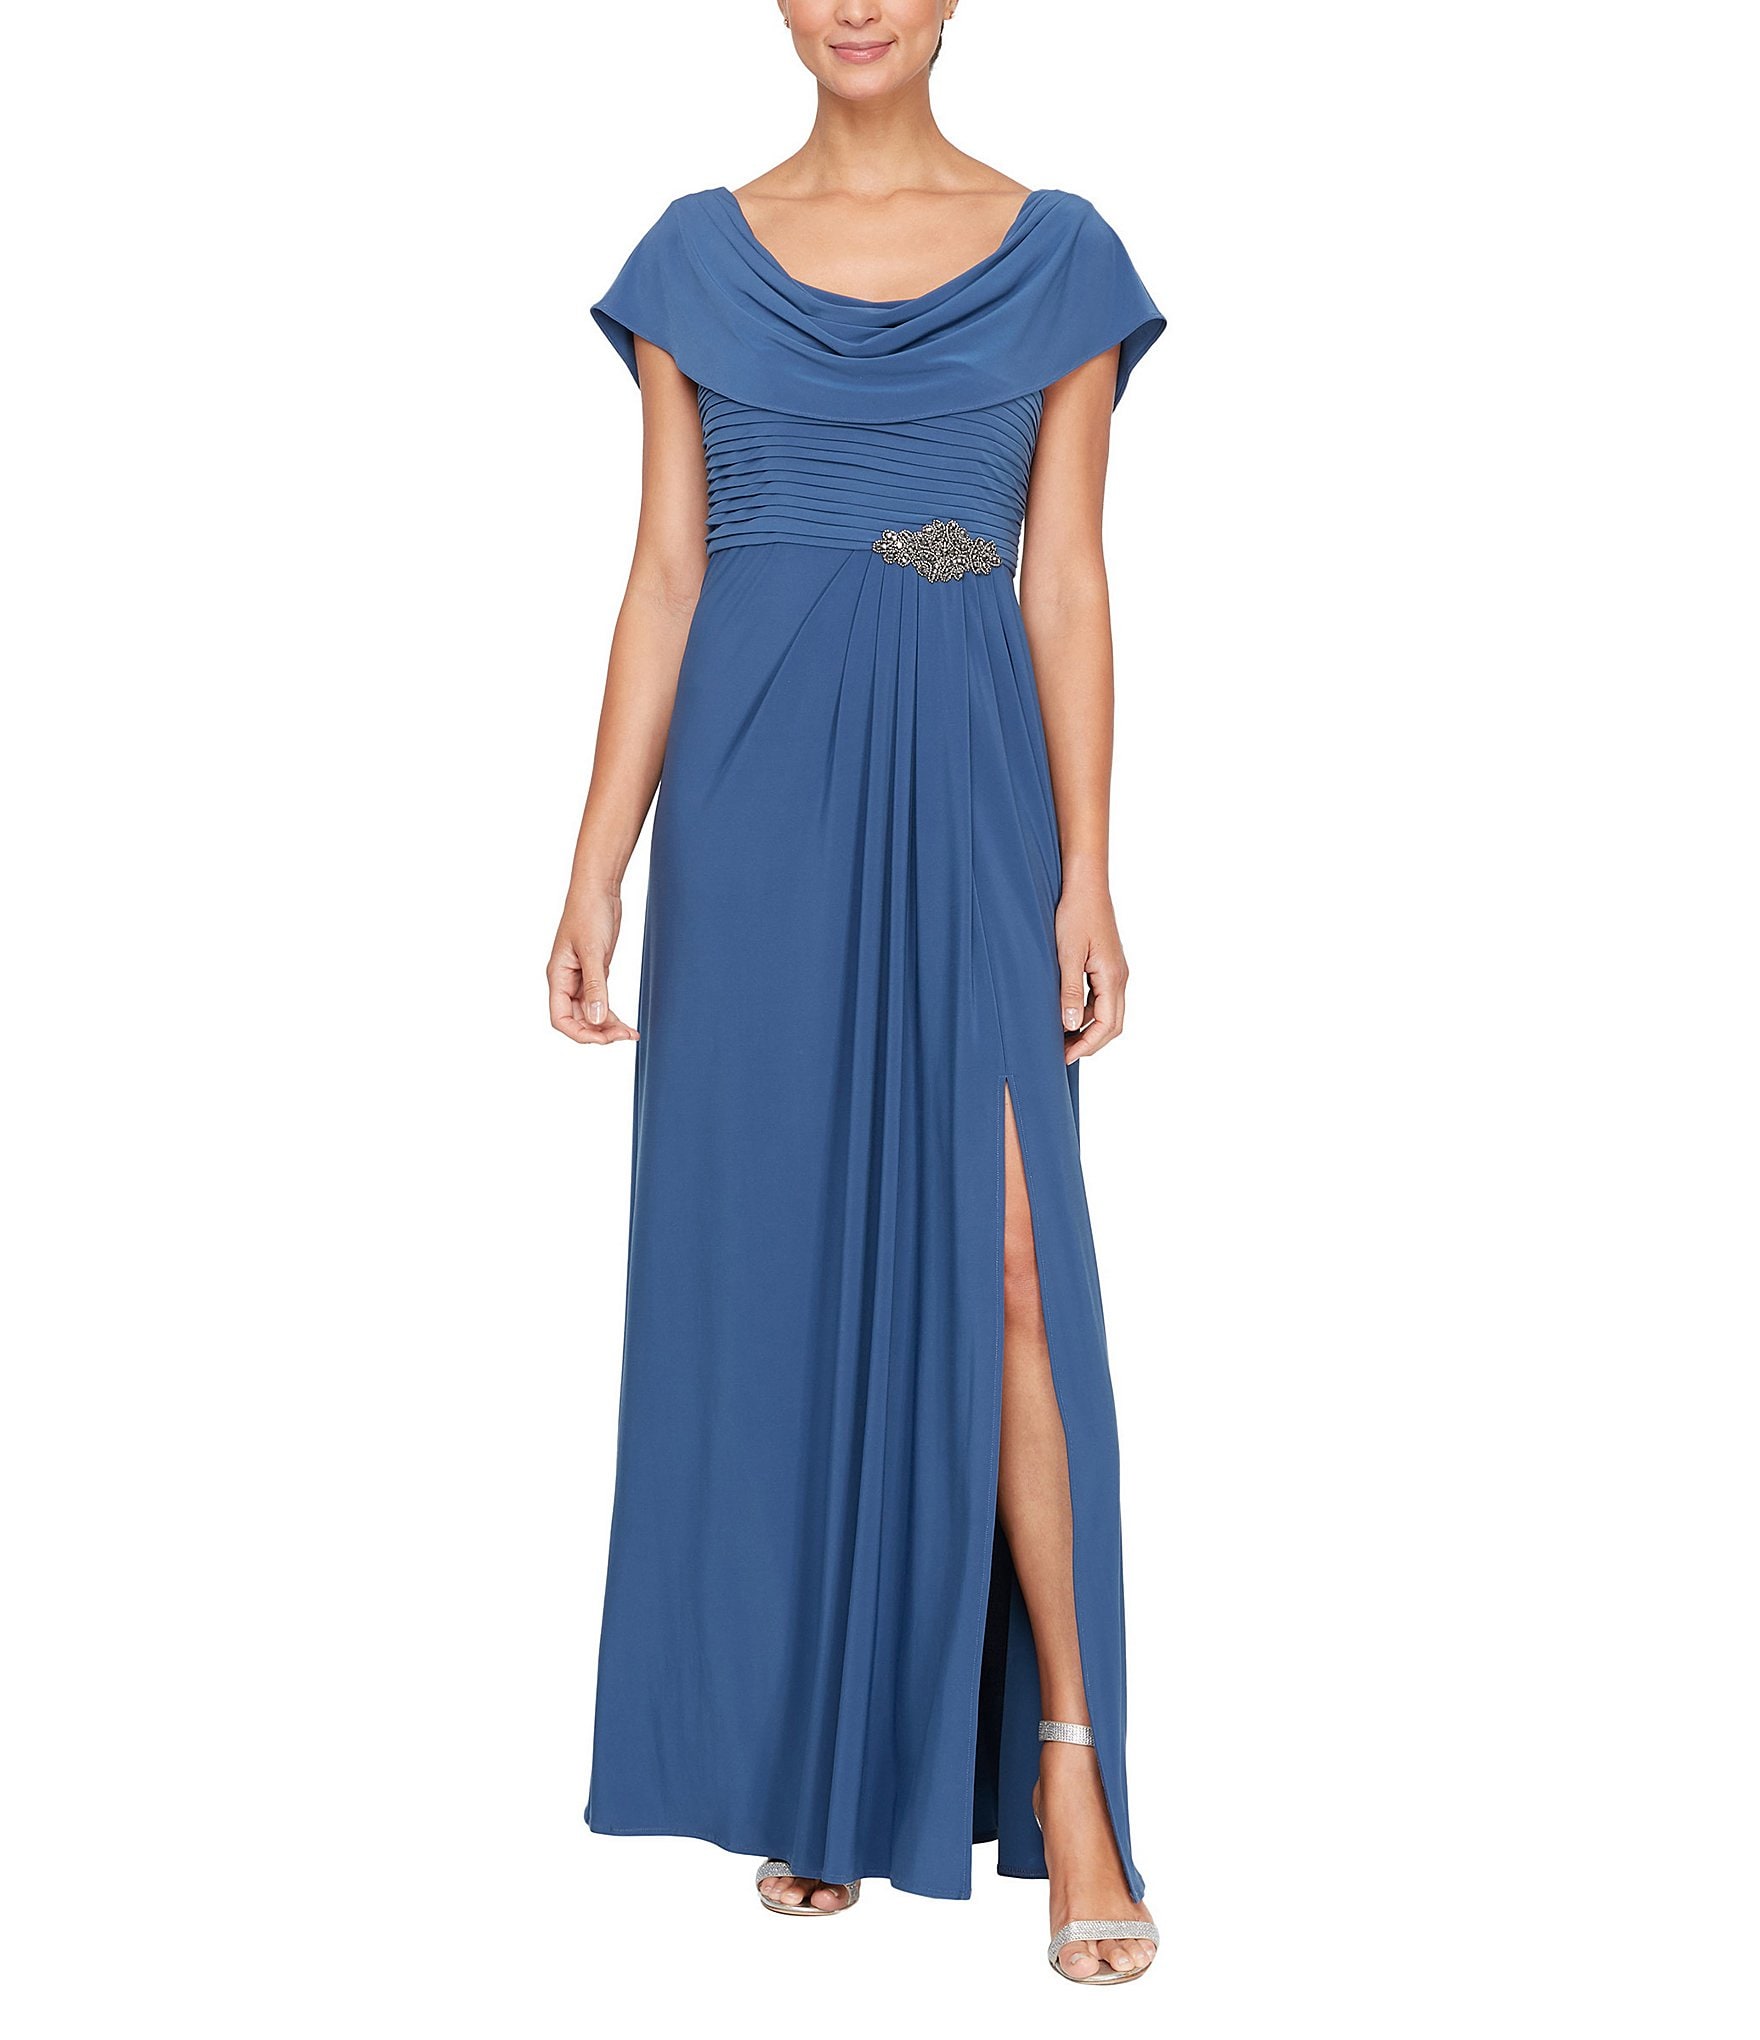 high neckline: Women's Formal Dresses & Evening Gowns